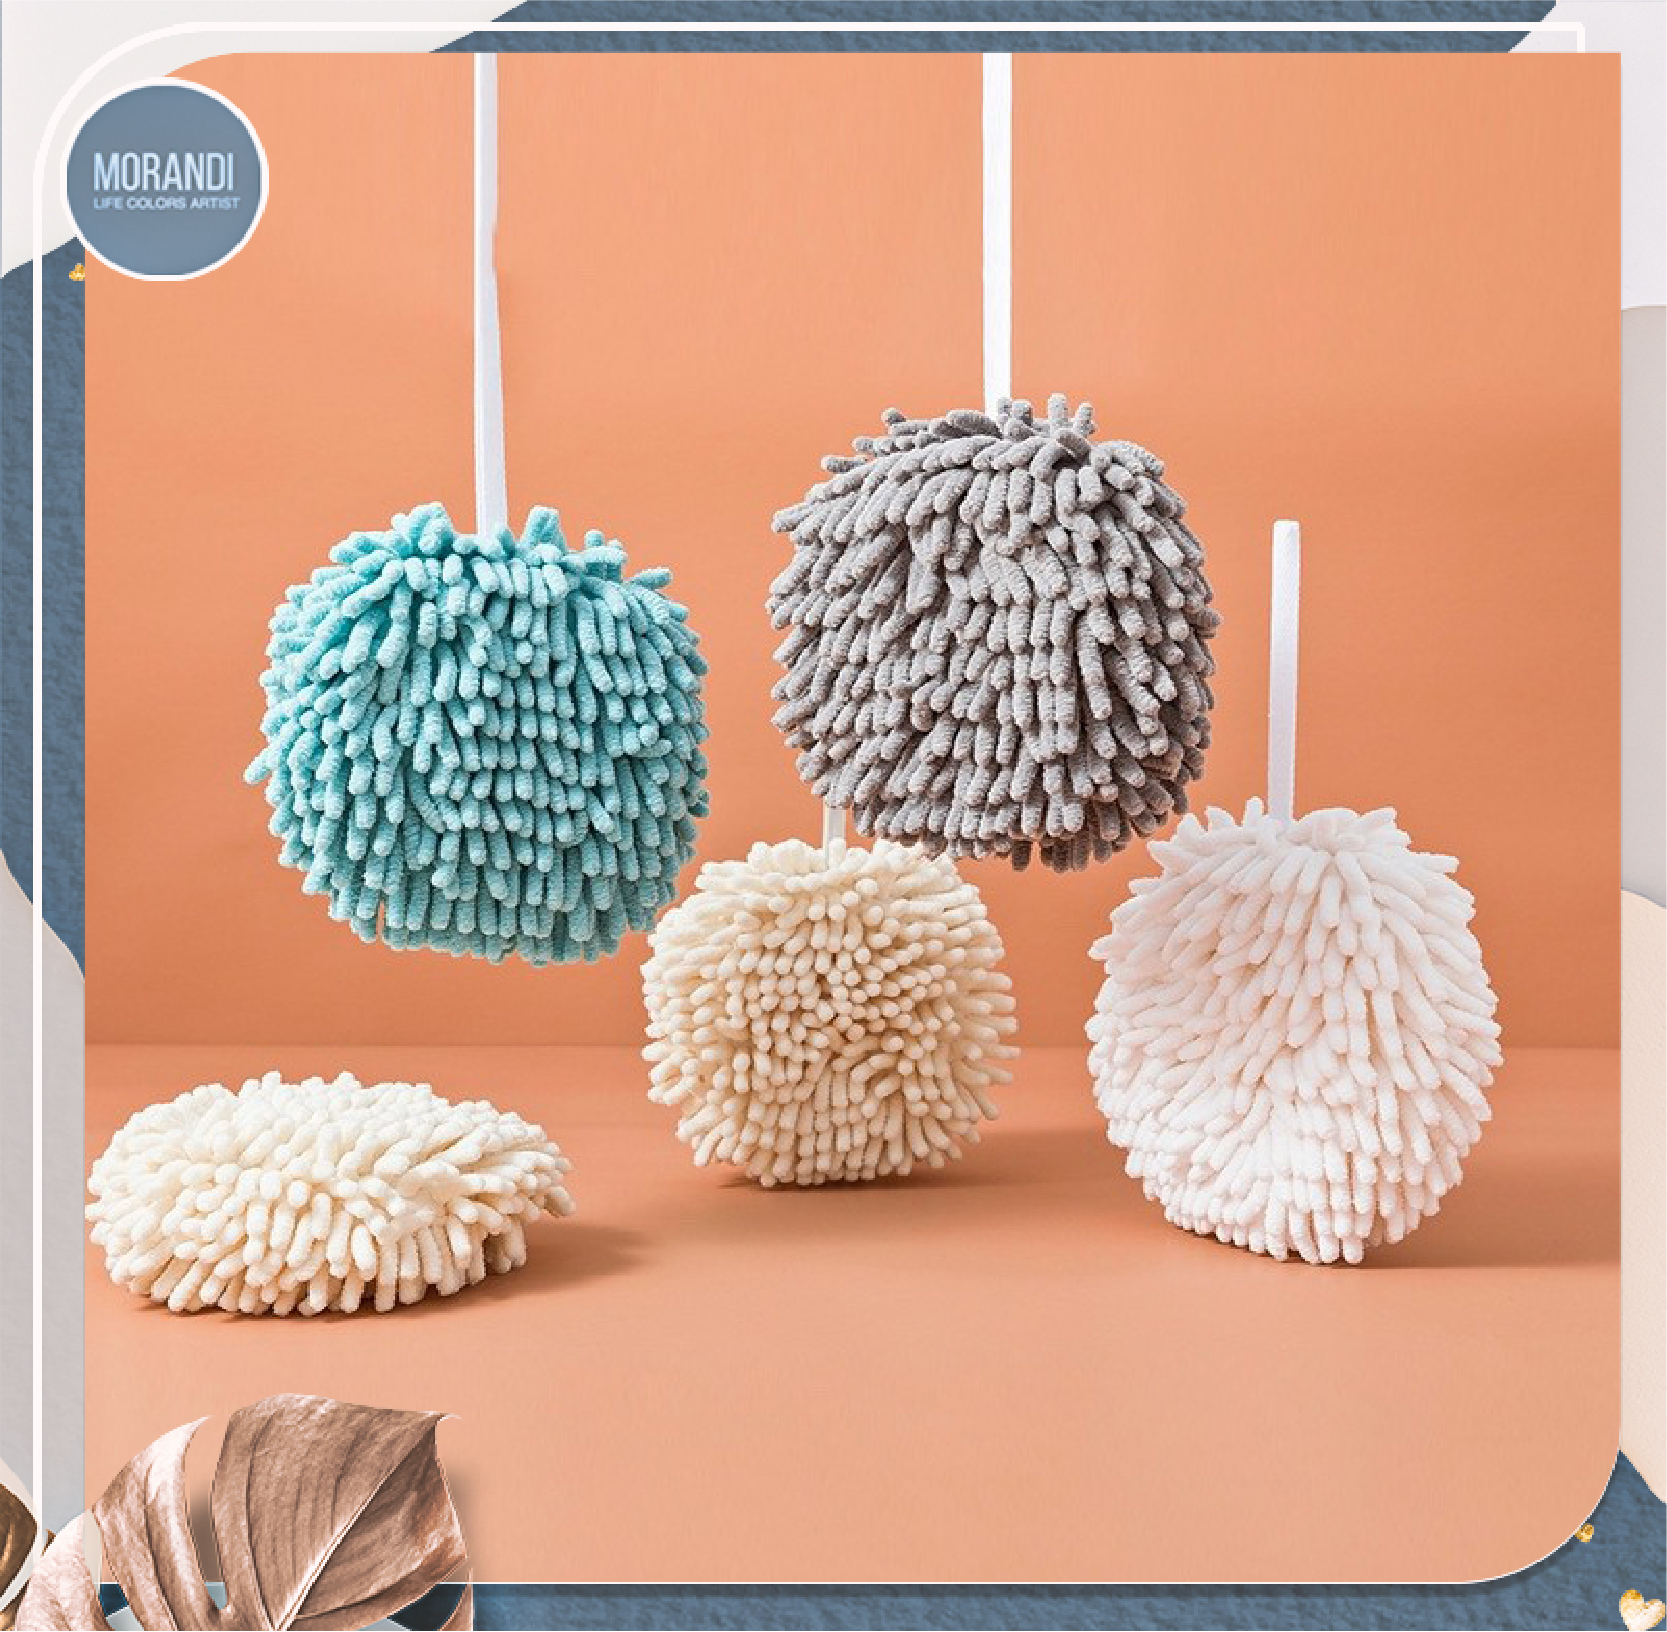 Morandi ผ้าเช็ดมือ ผ้าเช็ดมือแบบแขวน ลูกบอลดูดน้ำแห้ง  สำหรับห้องน้ำและห้องครัว